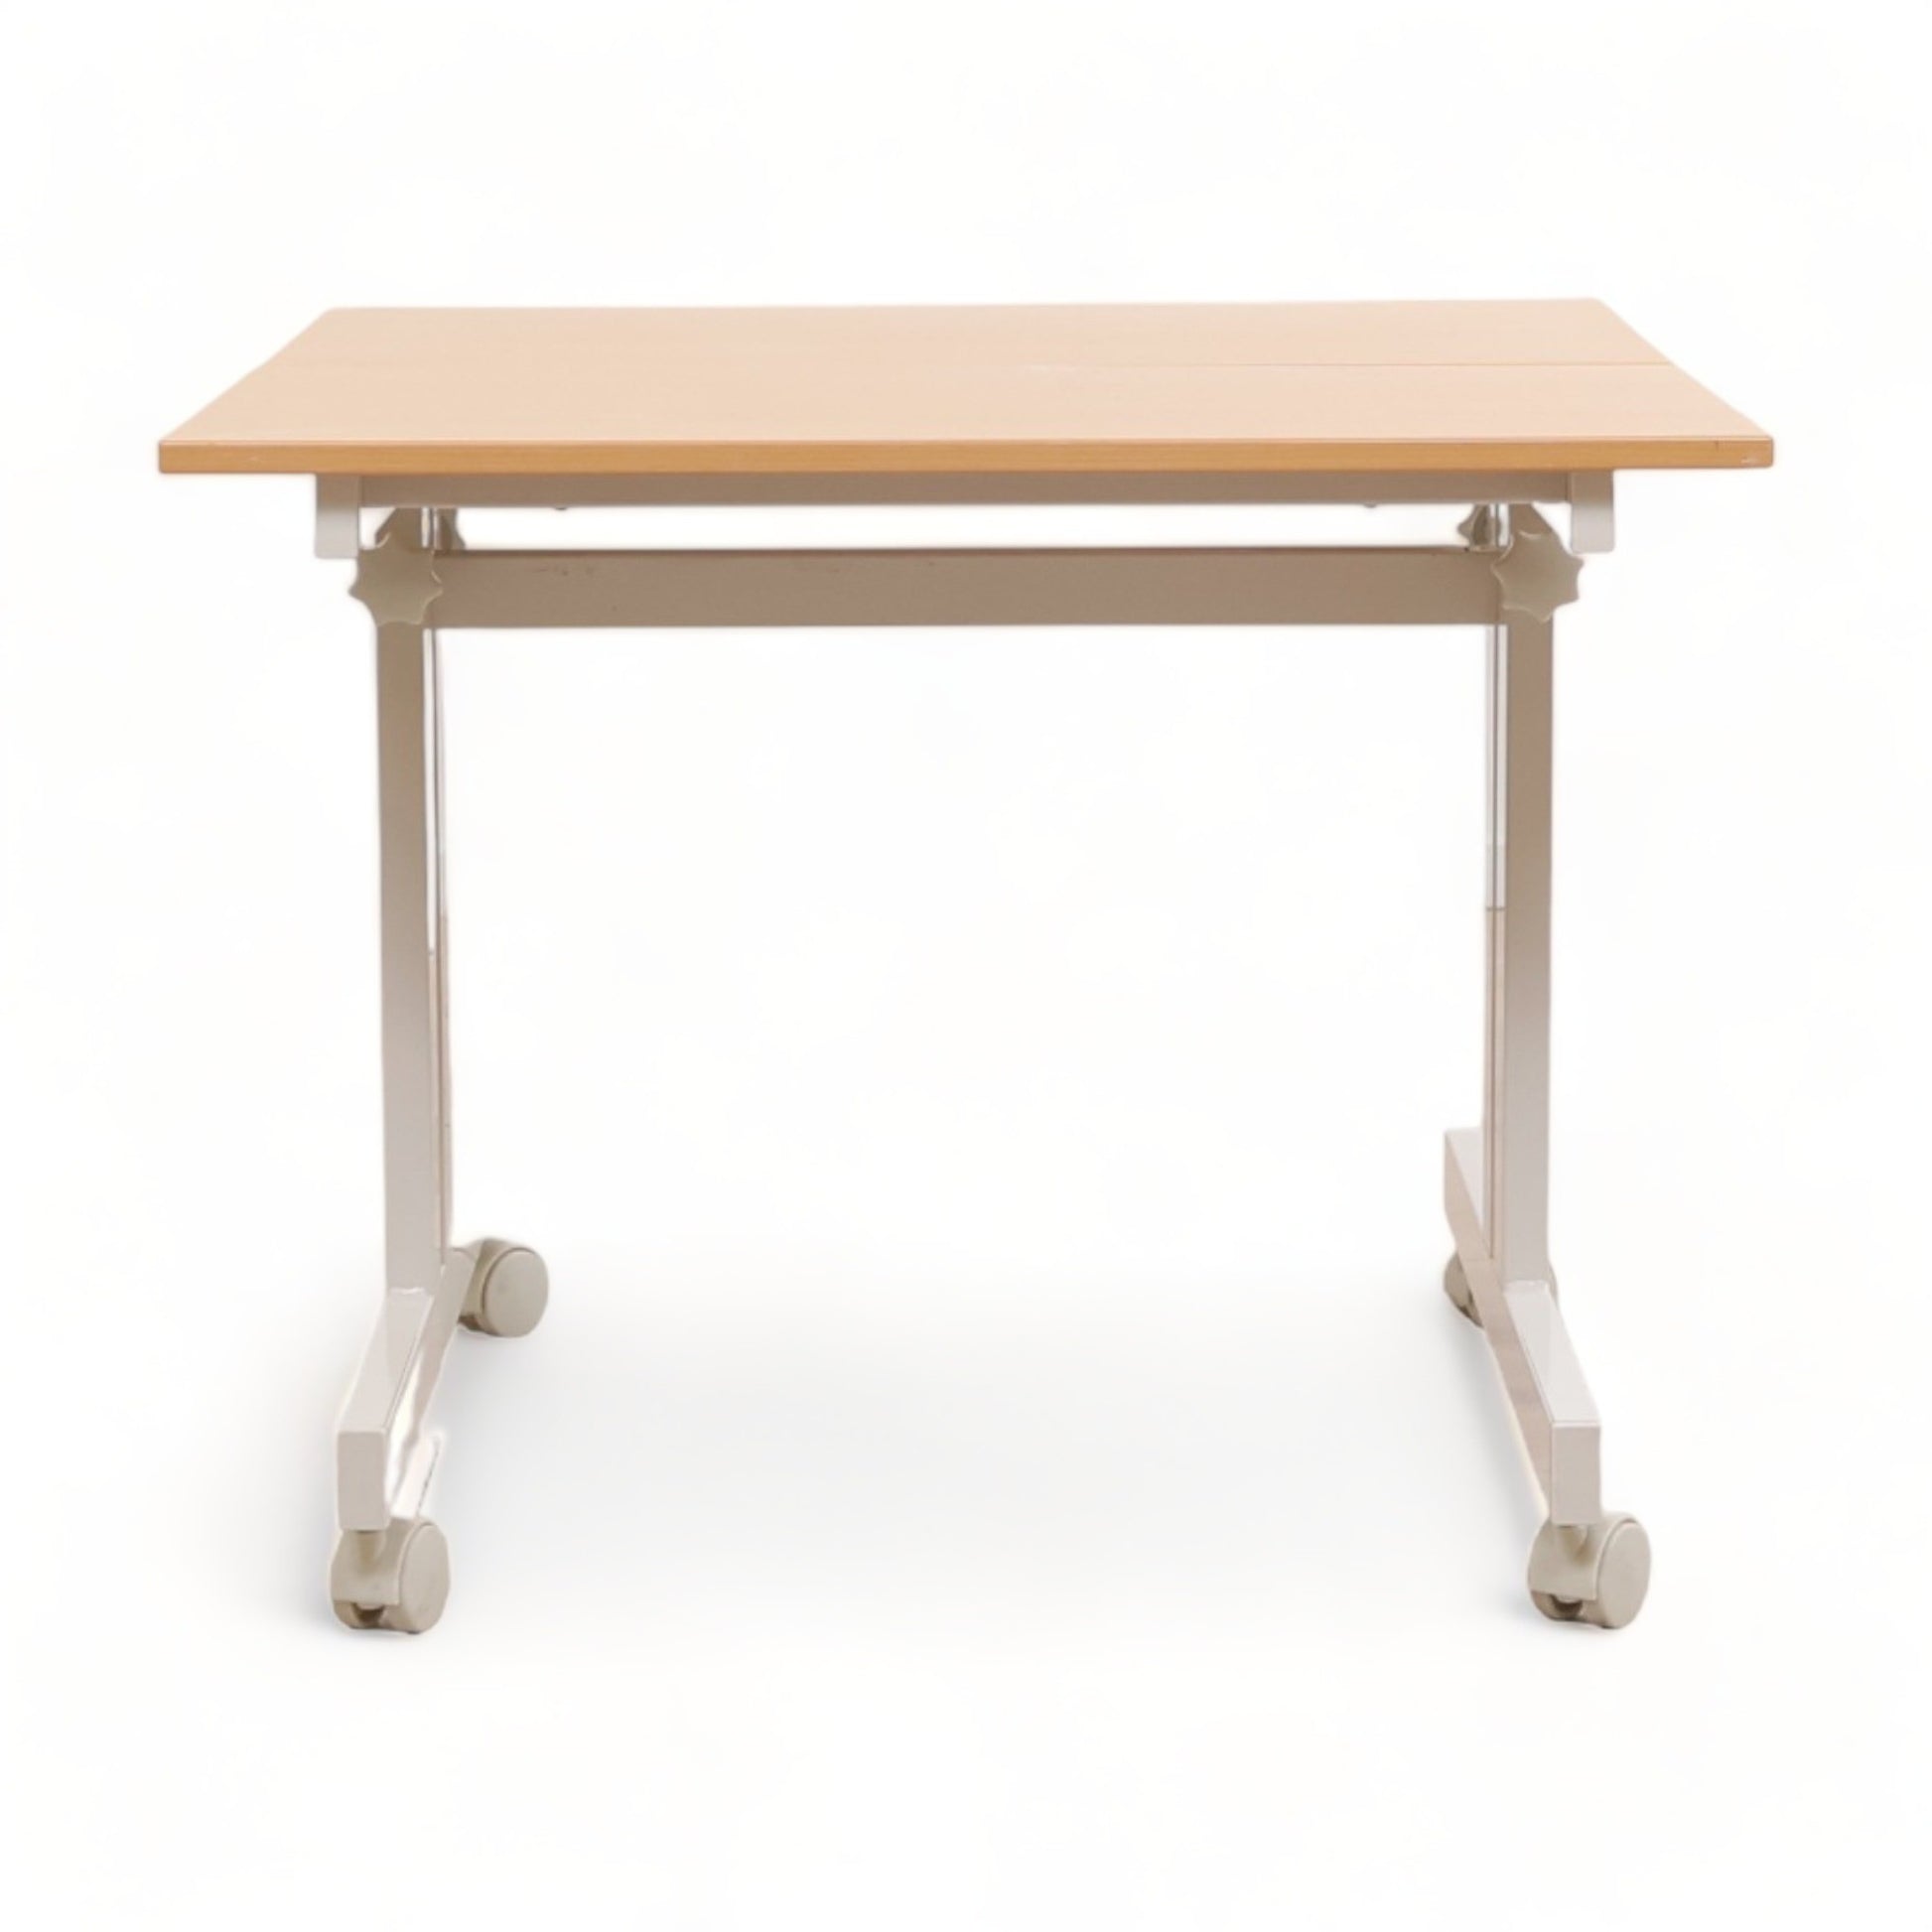 Kvalitetssikret | Mindre skrivebord med hjul, 75x80